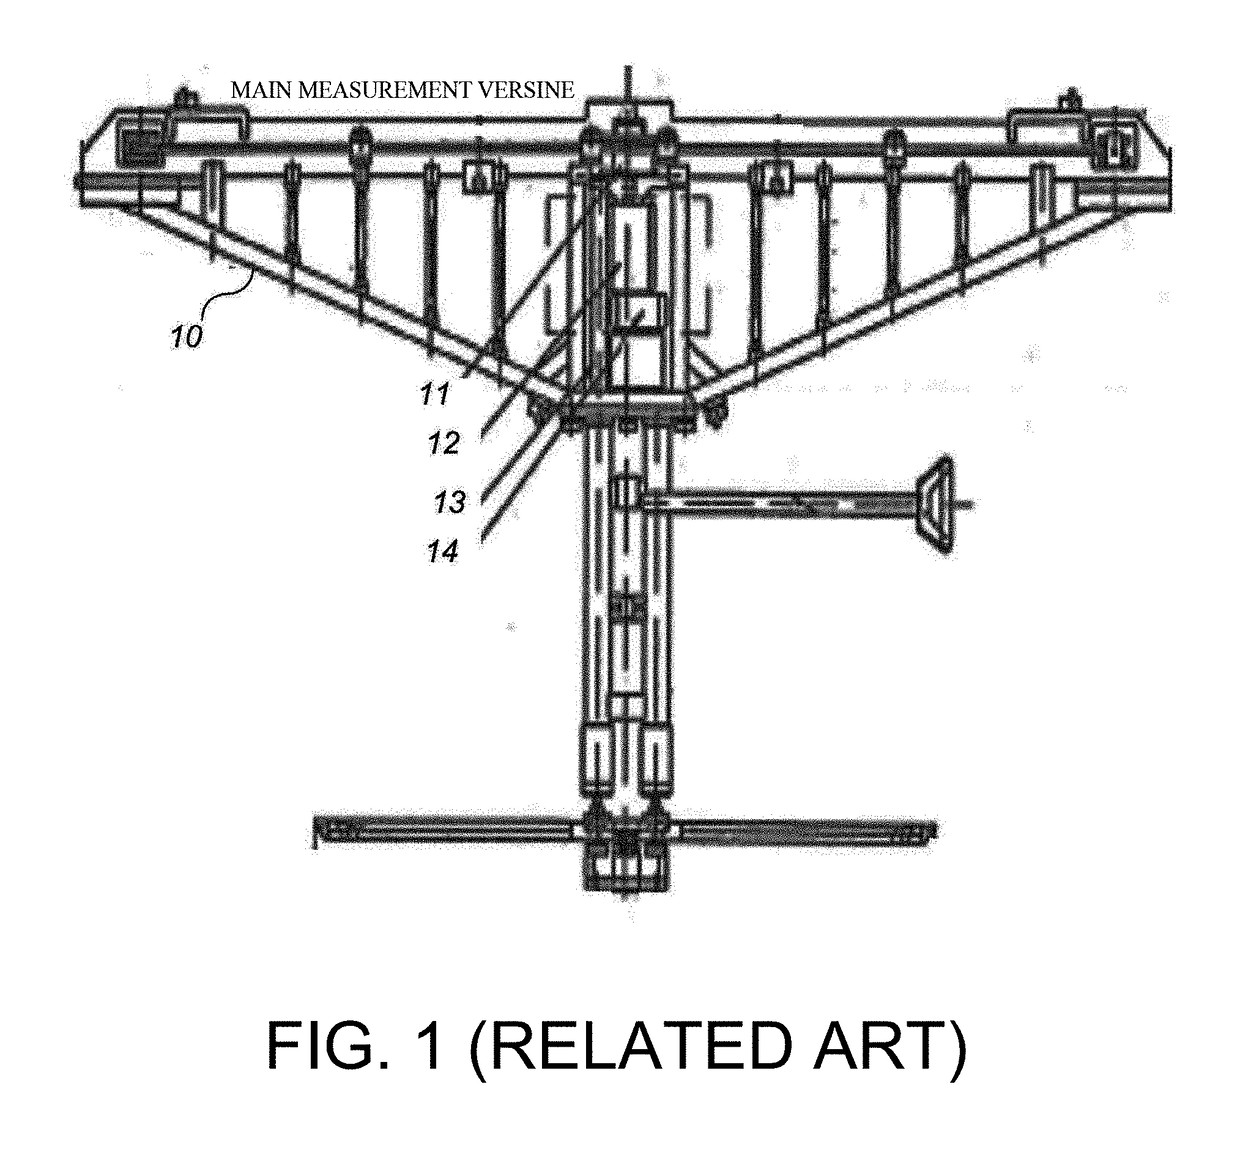 Versine trolley-type equipment for inspecting track irregularity